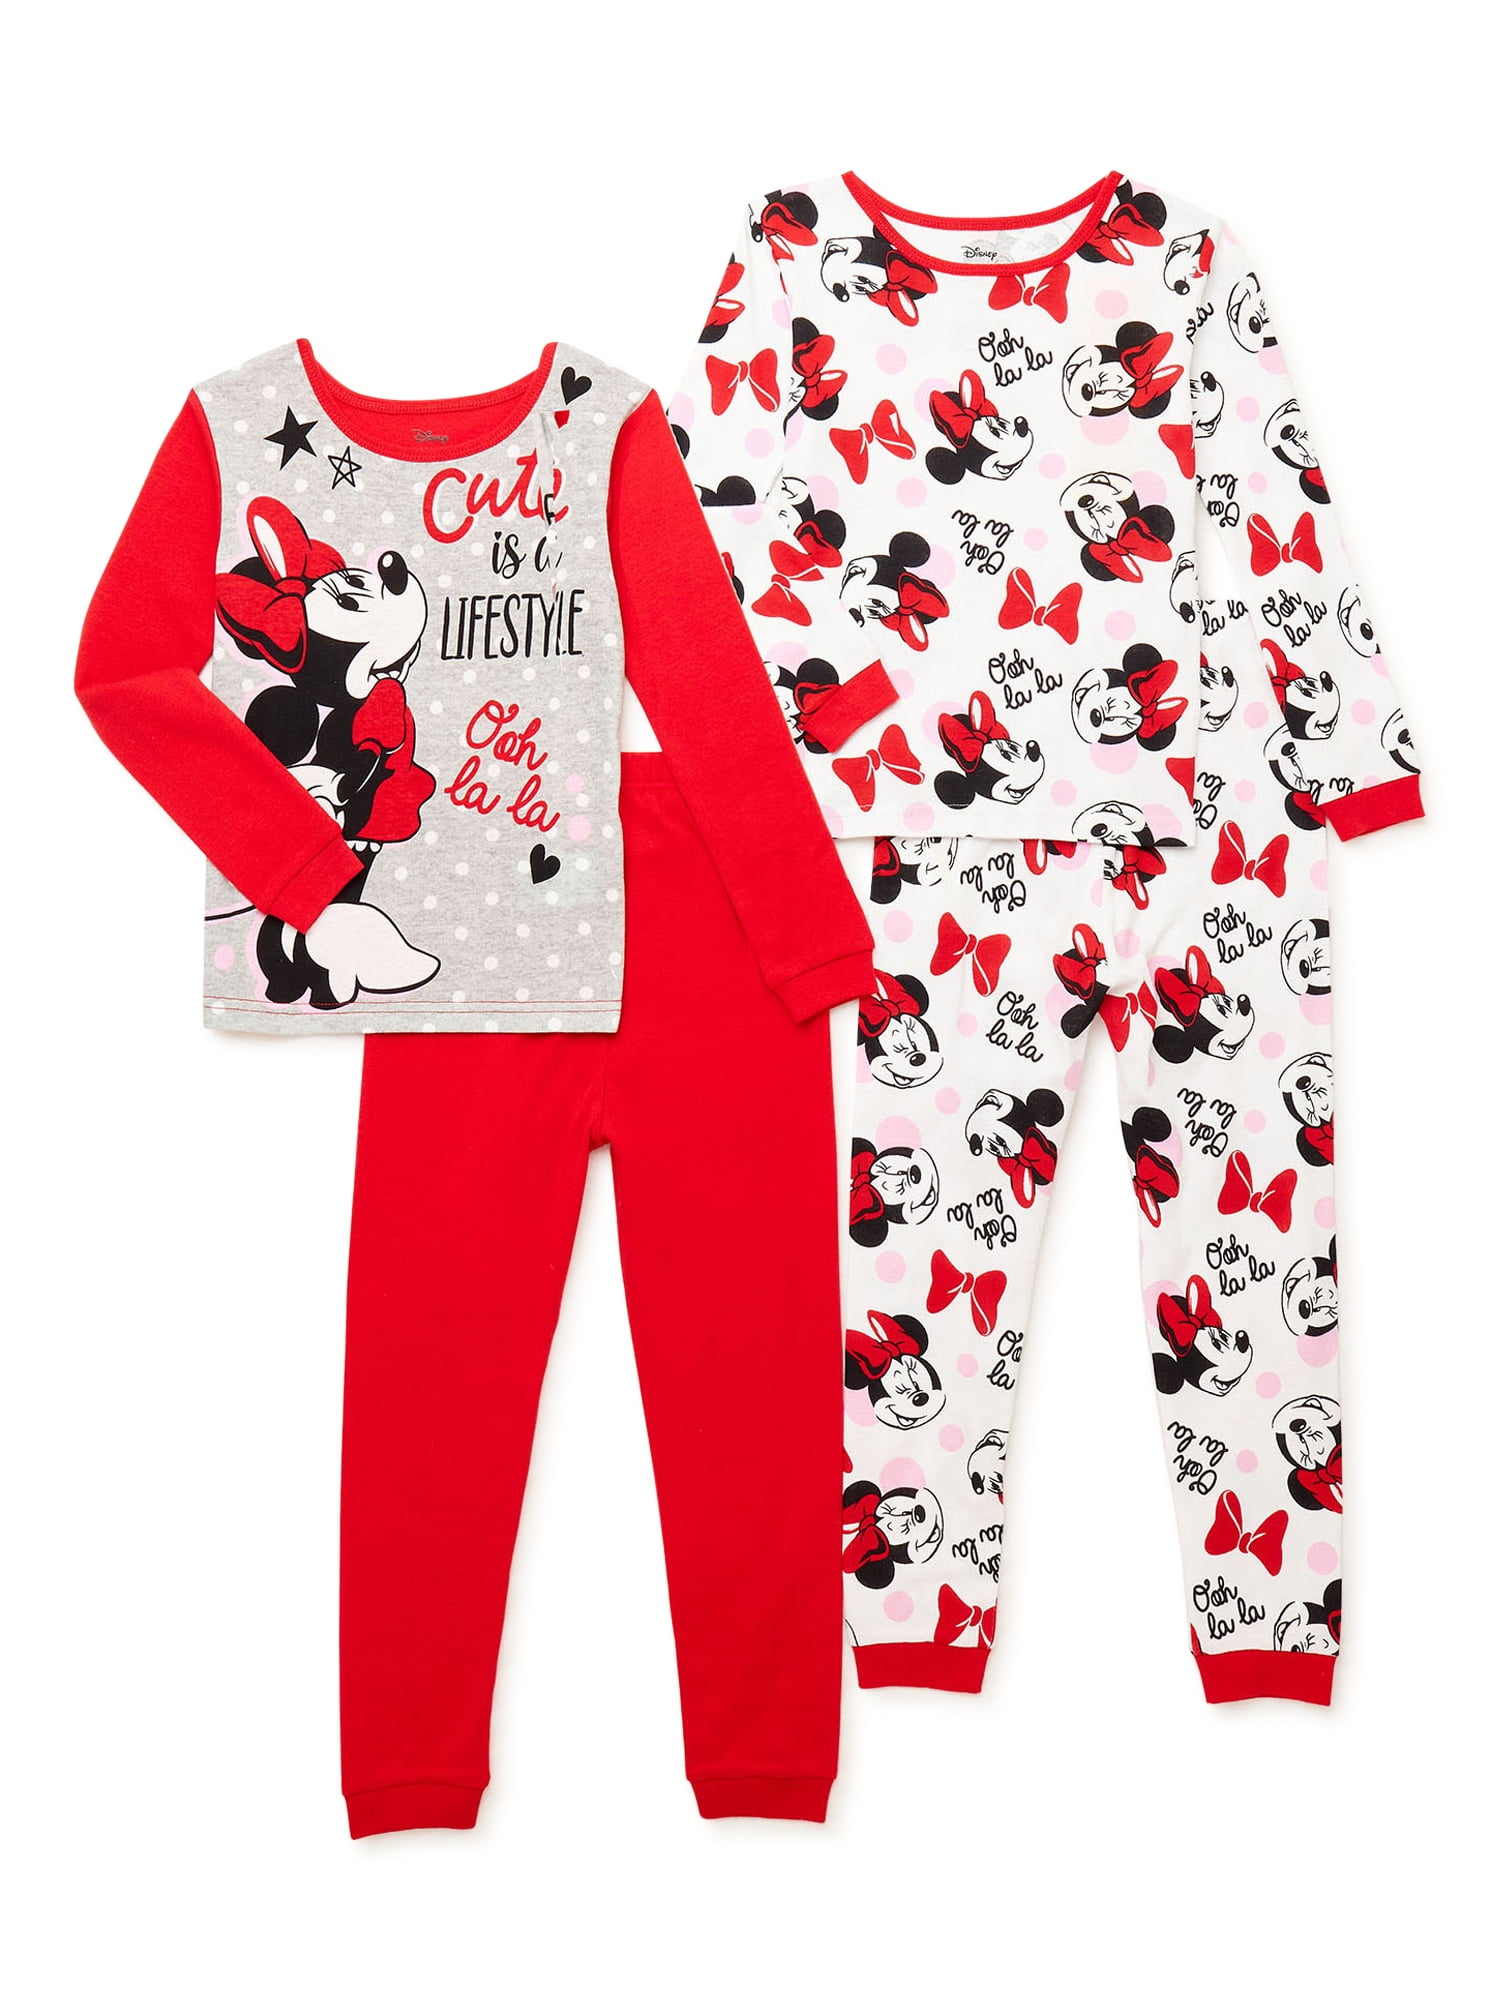 NWT Disney Store Minnie Mouse pajama set Holiday Christmas Girls Many Sizes 